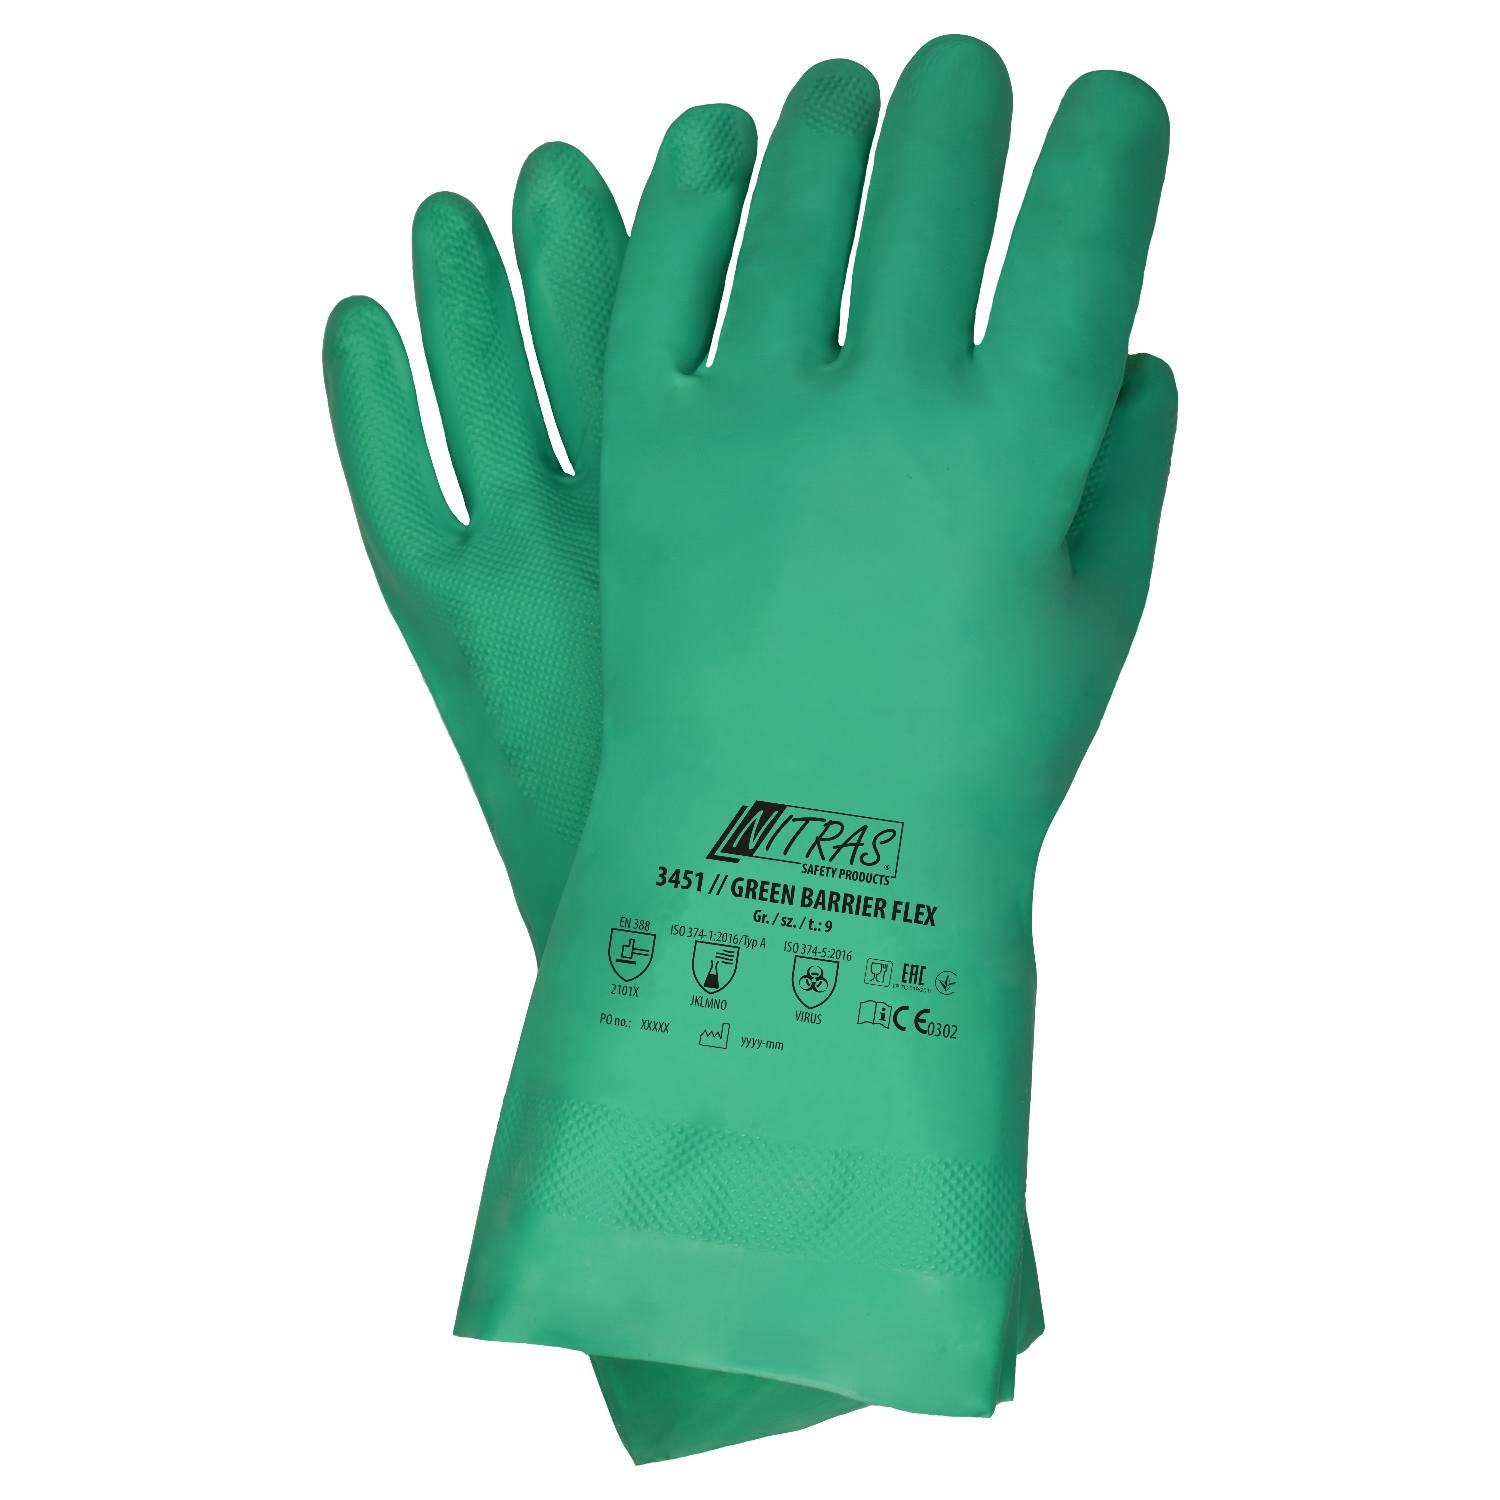 NITRAS GREEN BARRIER FLEX Nitril-Chemikalienschutzhandschuhe in grün - 1 Paar